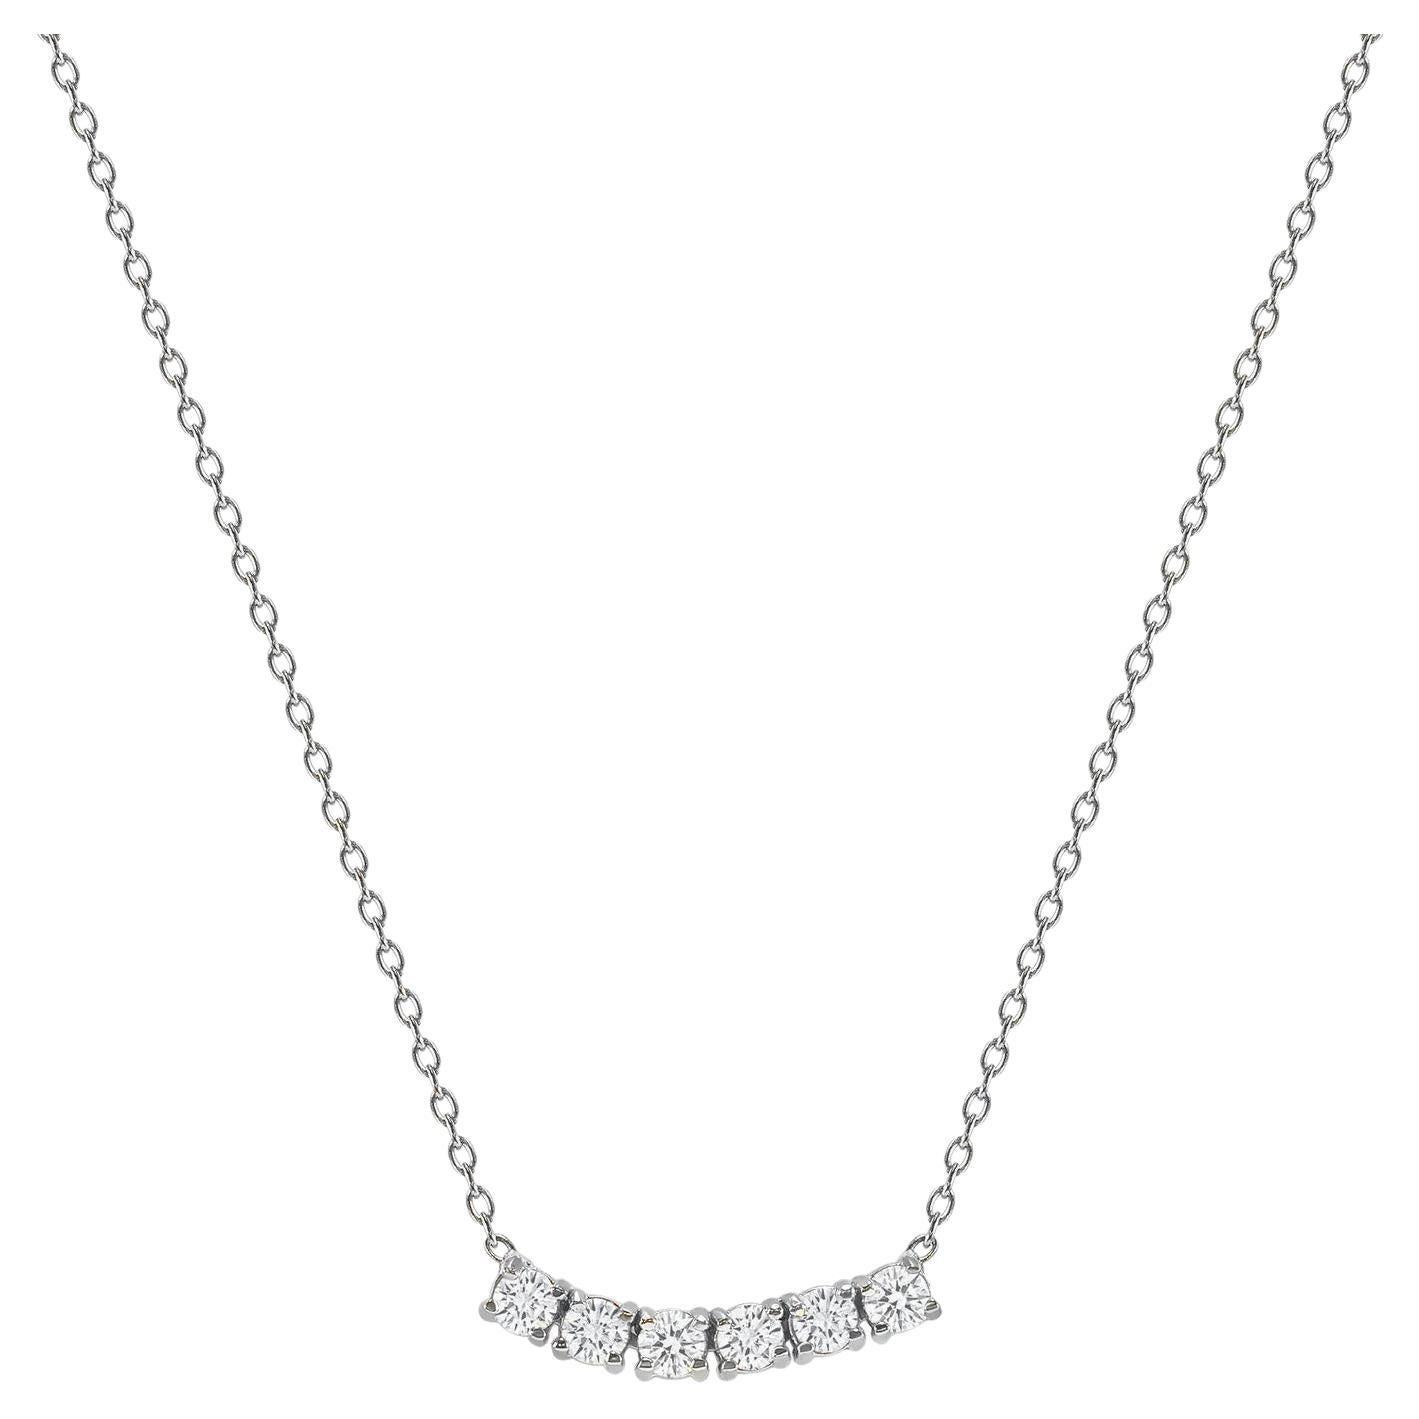 14k White Gold 1 Carat Petite Round Diamond Six Stone Curved Necklace